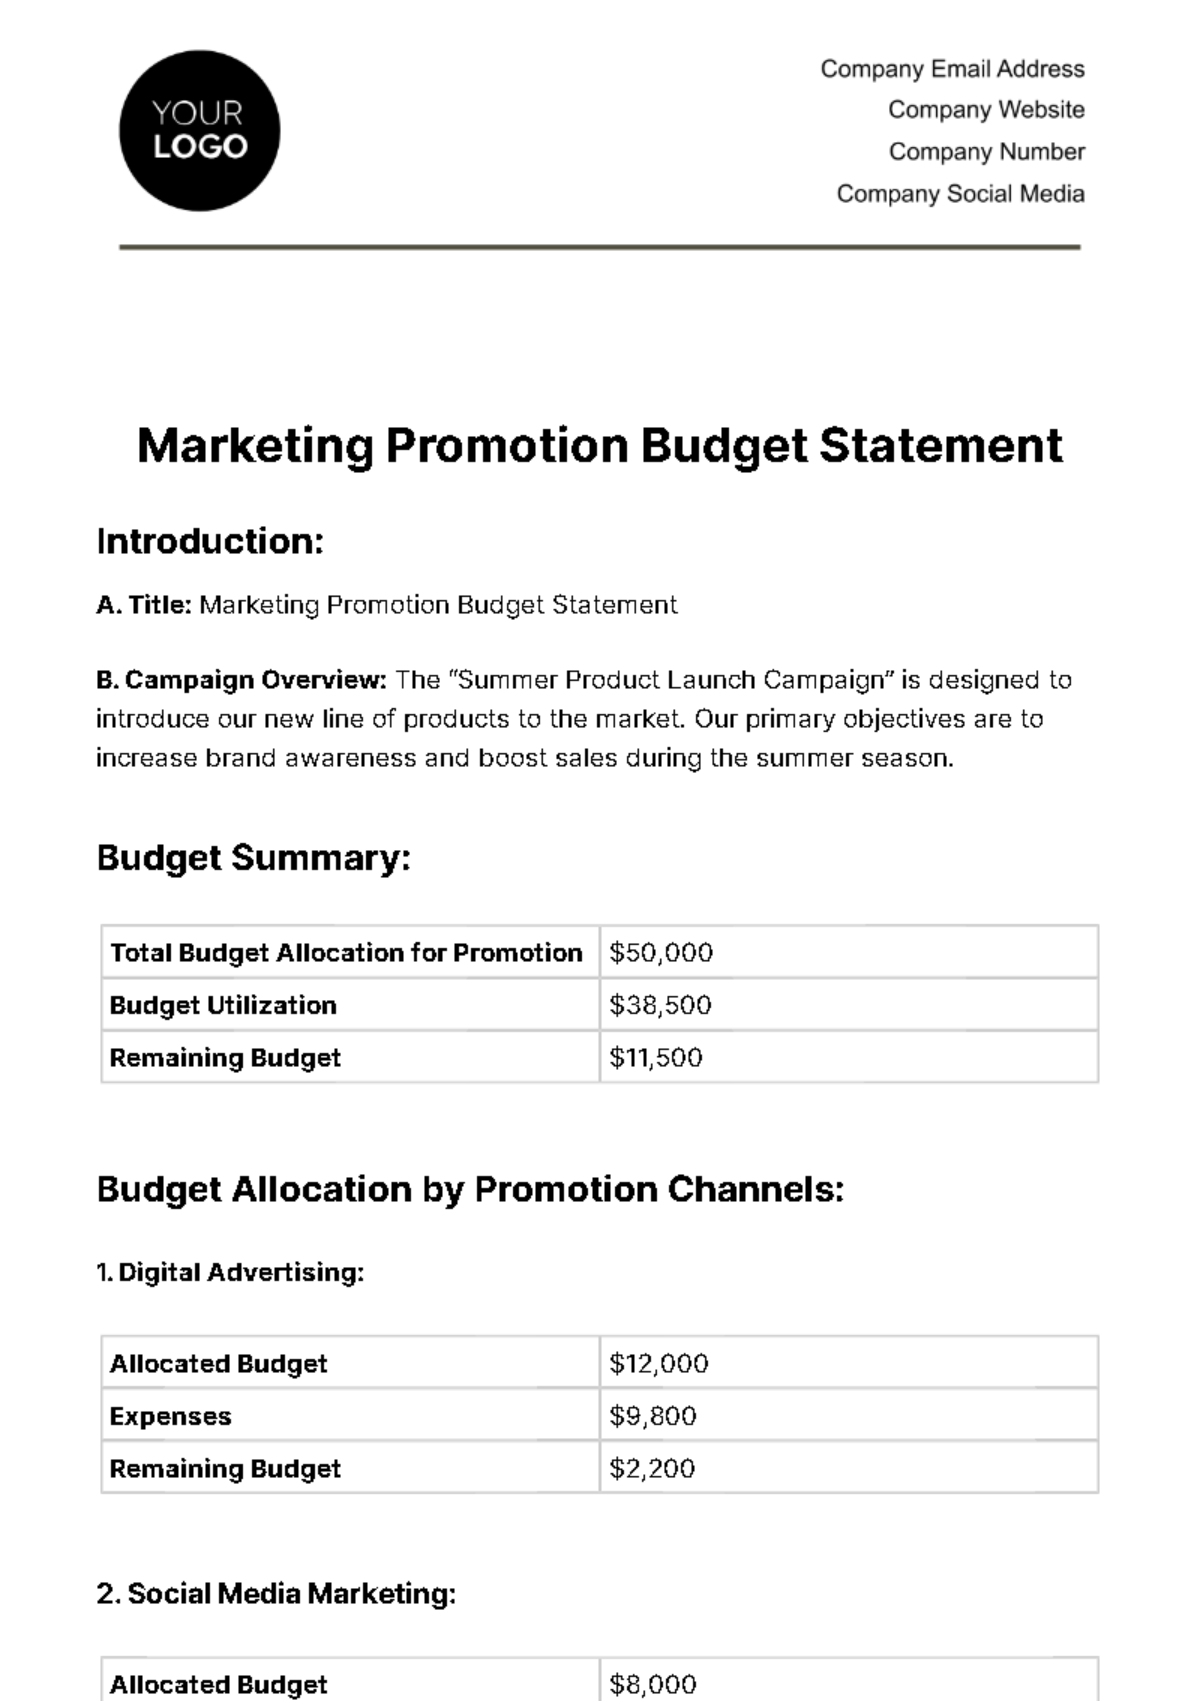 Free Marketing Promotion Budget Statement Template